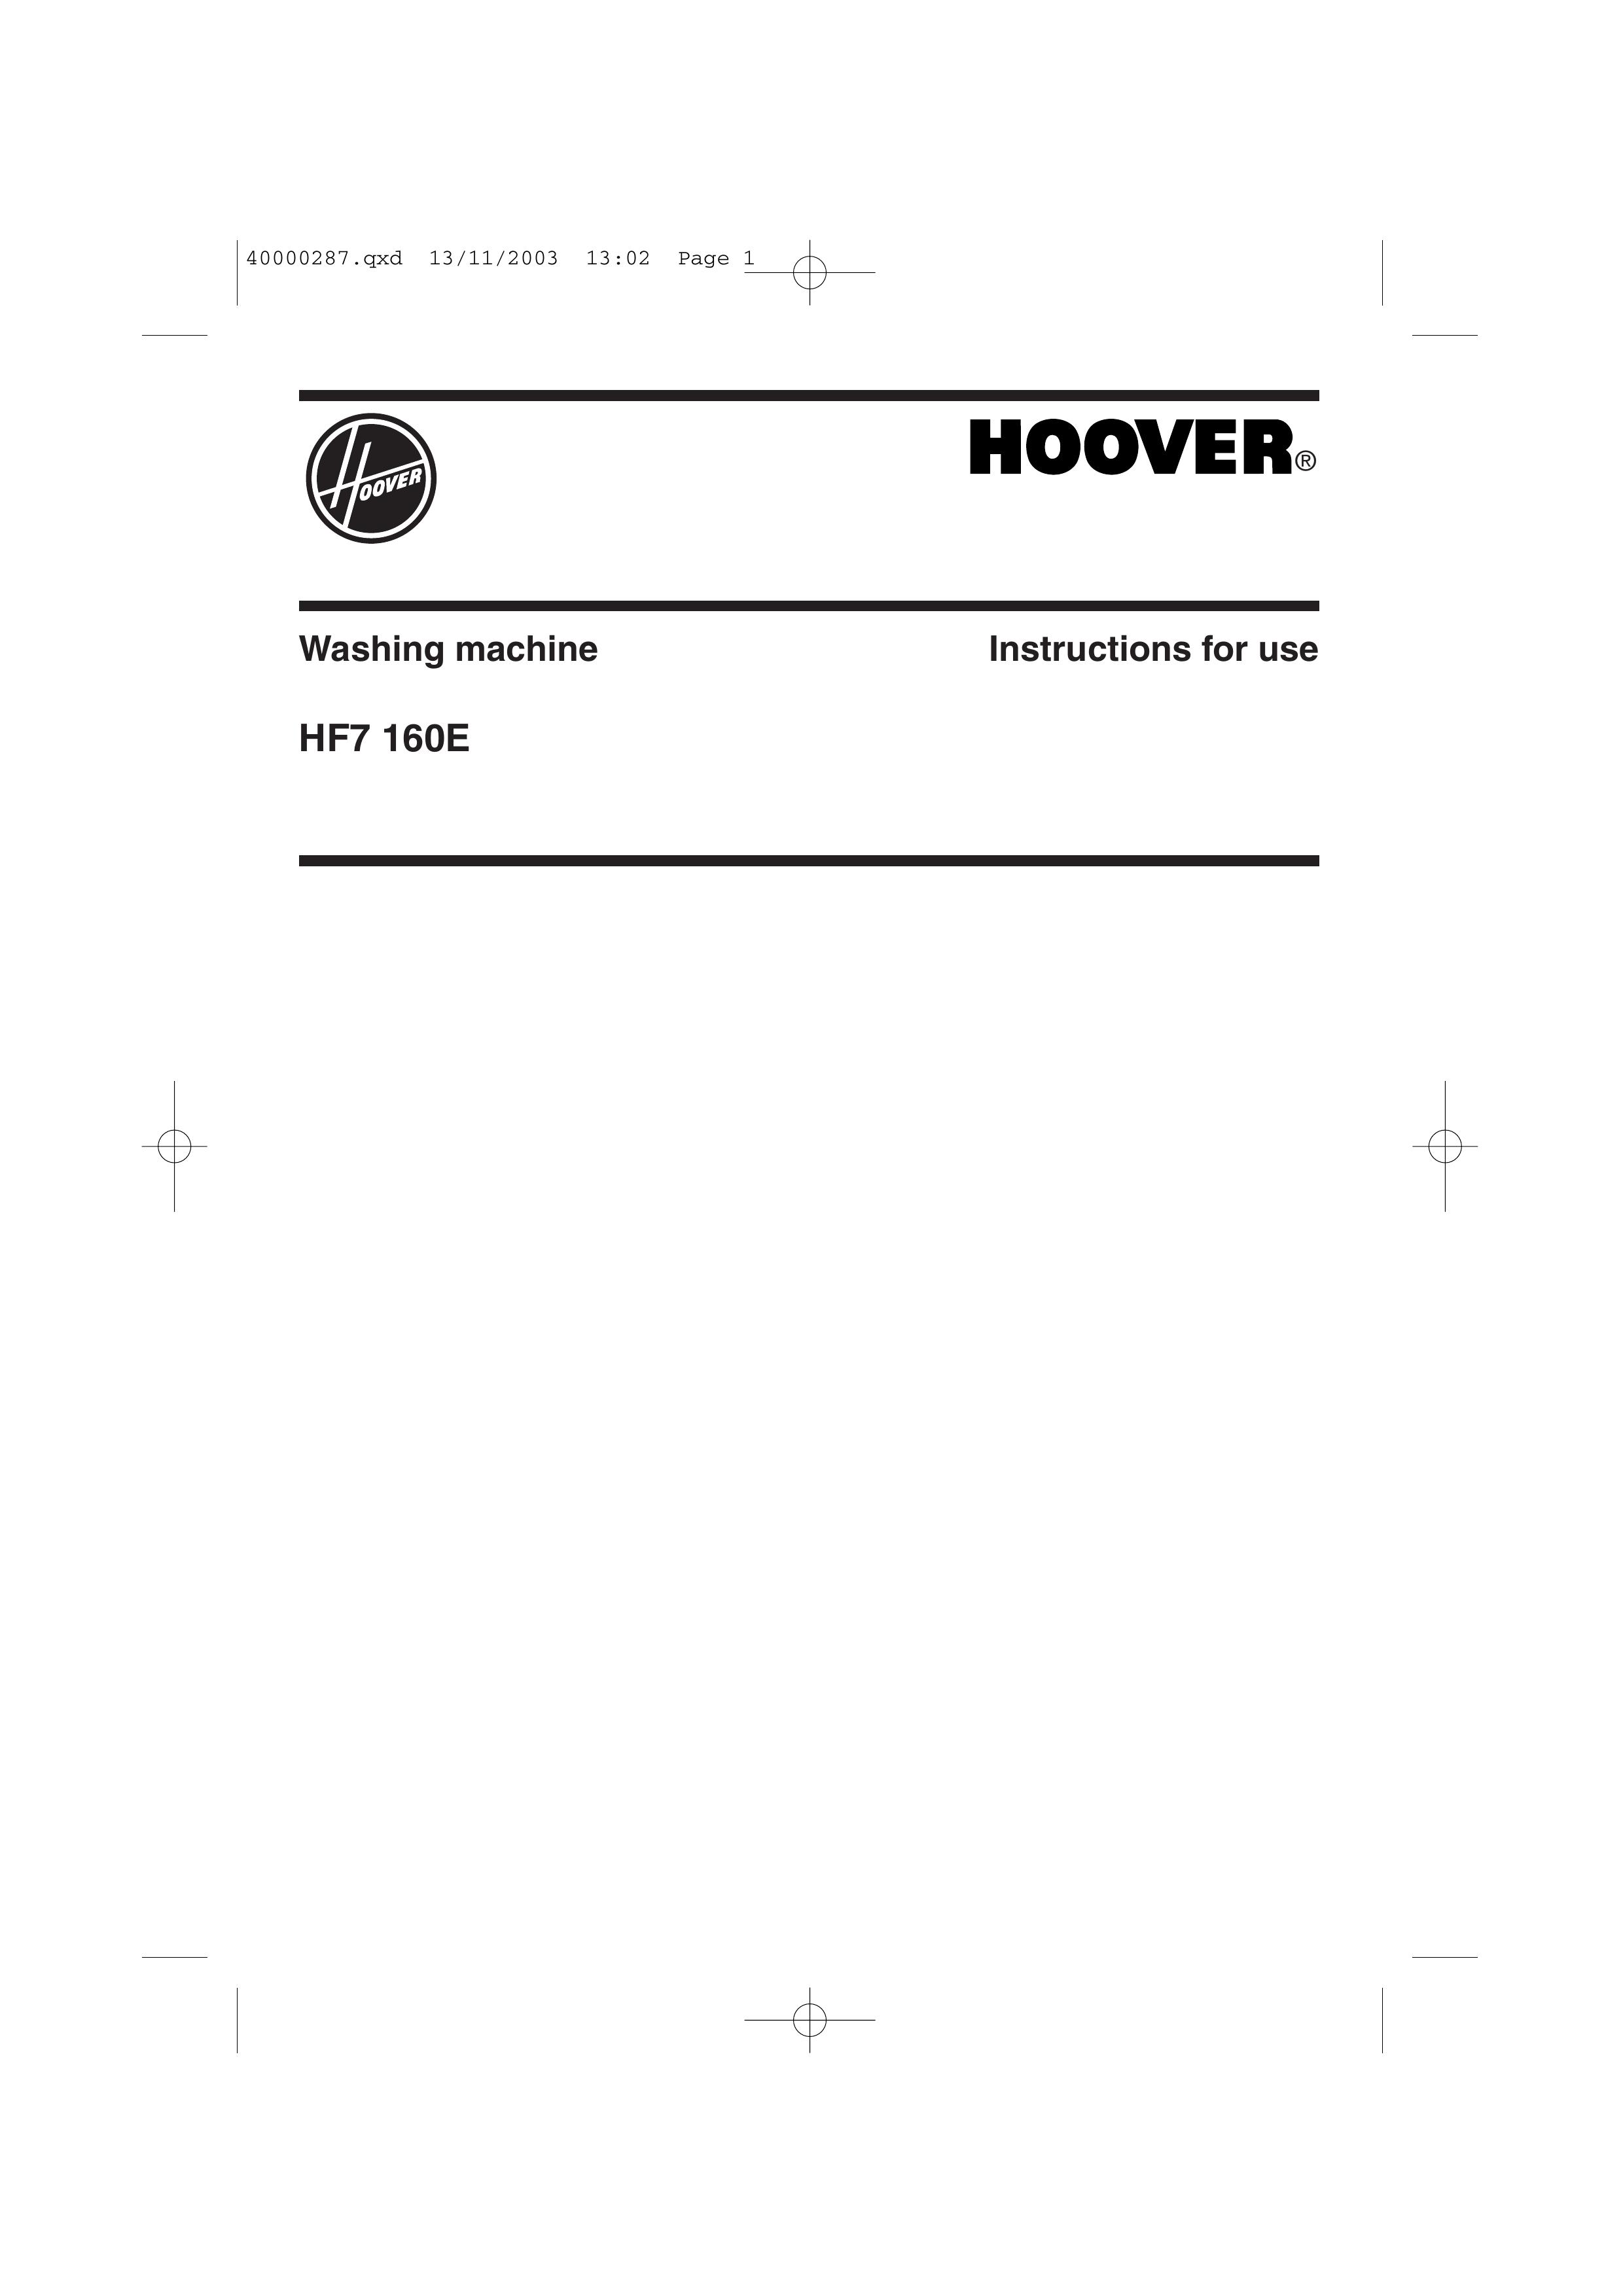 Hoover HF7 160E Washer User Manual